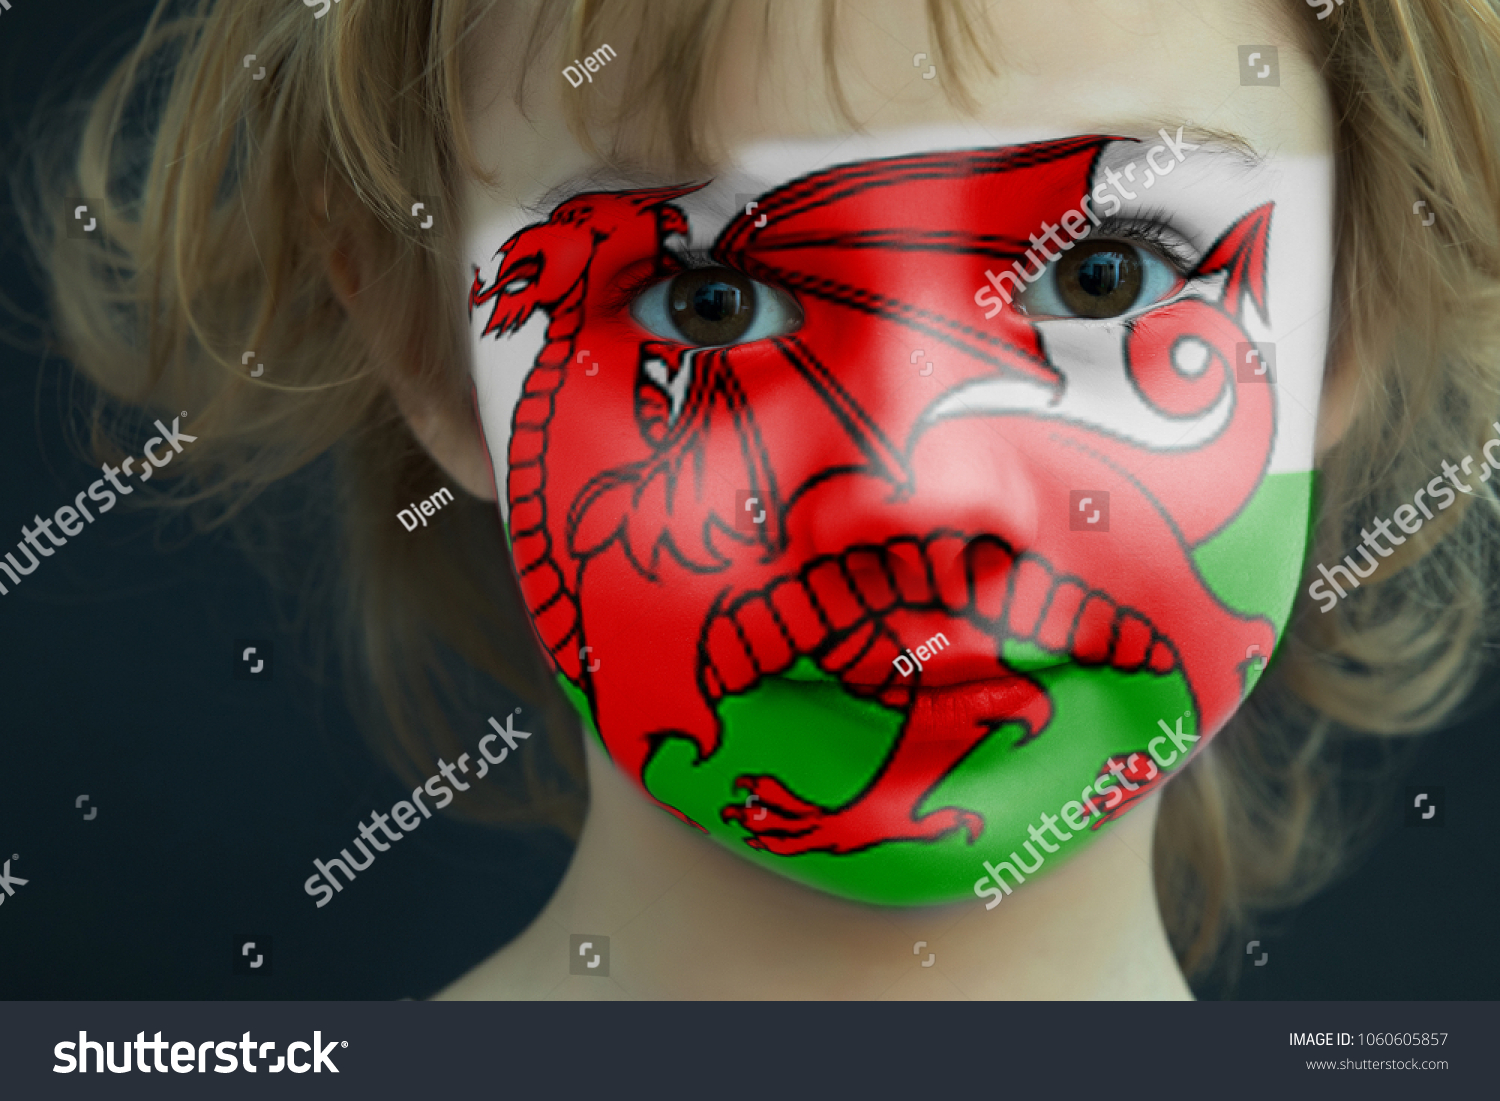 1008 Welsh Fan Gambar Foto Stok And Vektor Shutterstock 5771